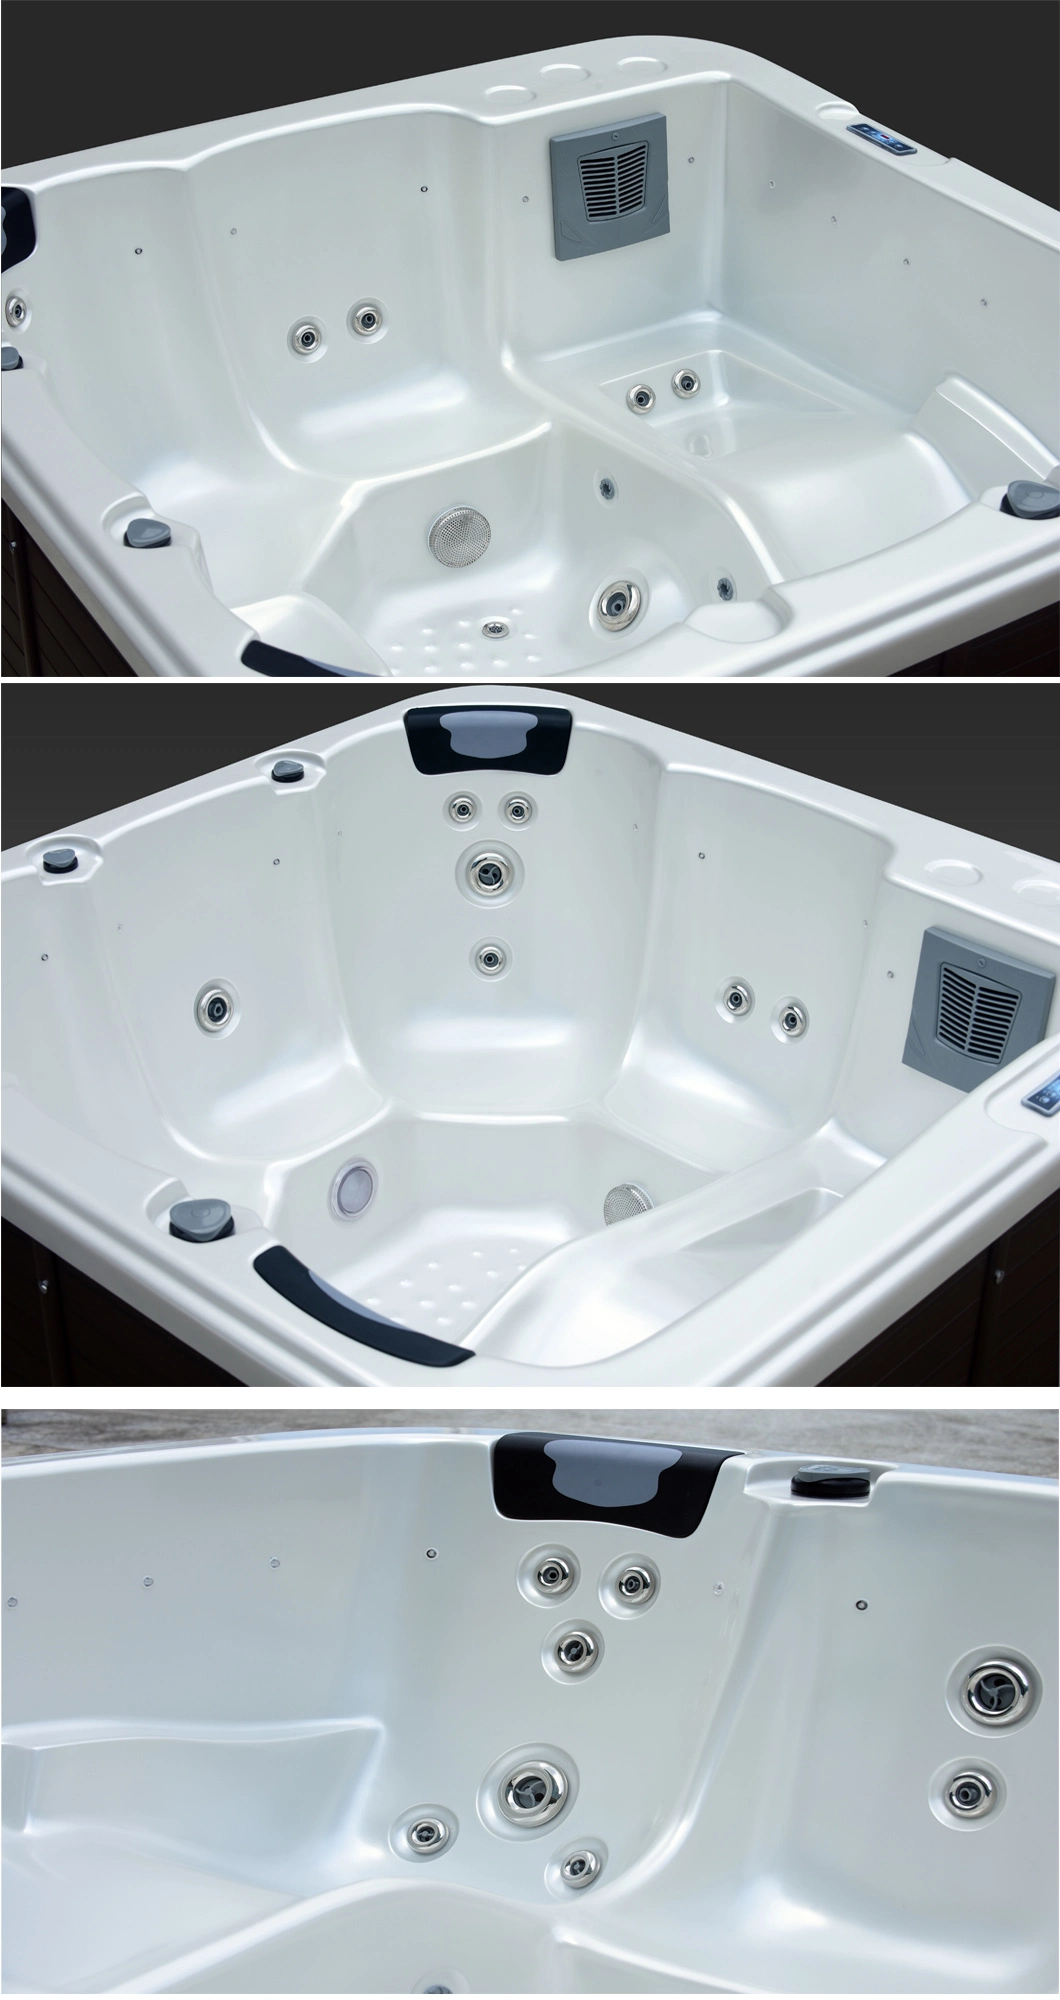 New Artesian Acrylic Inflatable Portable SPA Tub Hot Tub